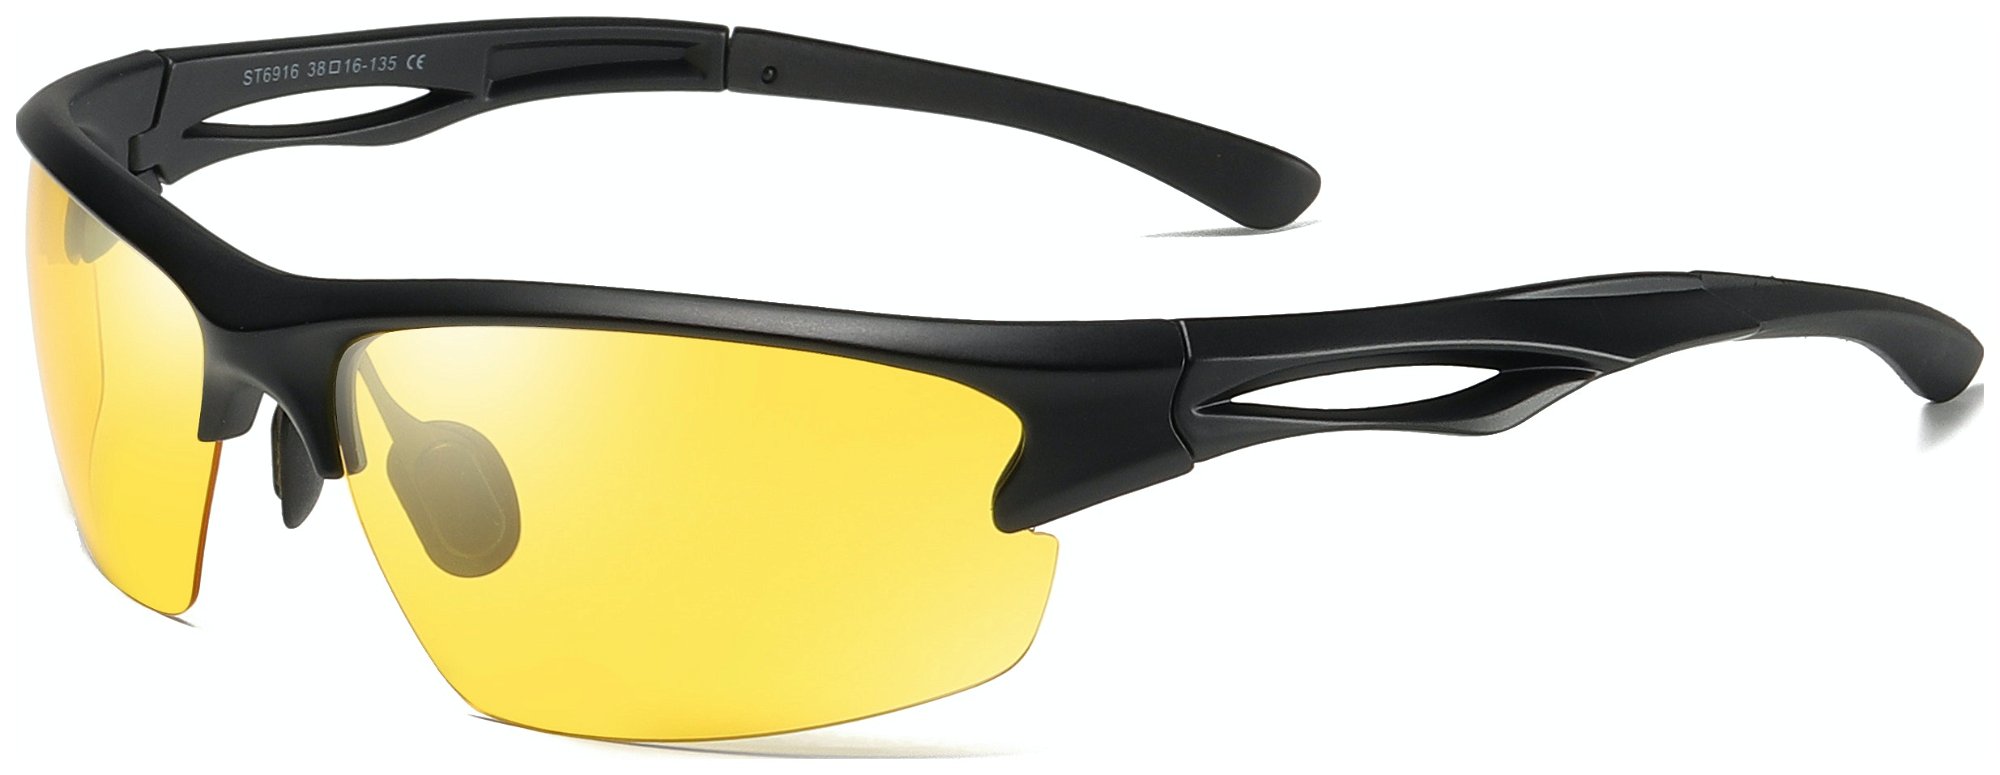 Sports solbriller til mænd, Drift by Kaleu (H: 6,5 cm. x B: 1,6 cm. x L: 13,5 cm., Gul)